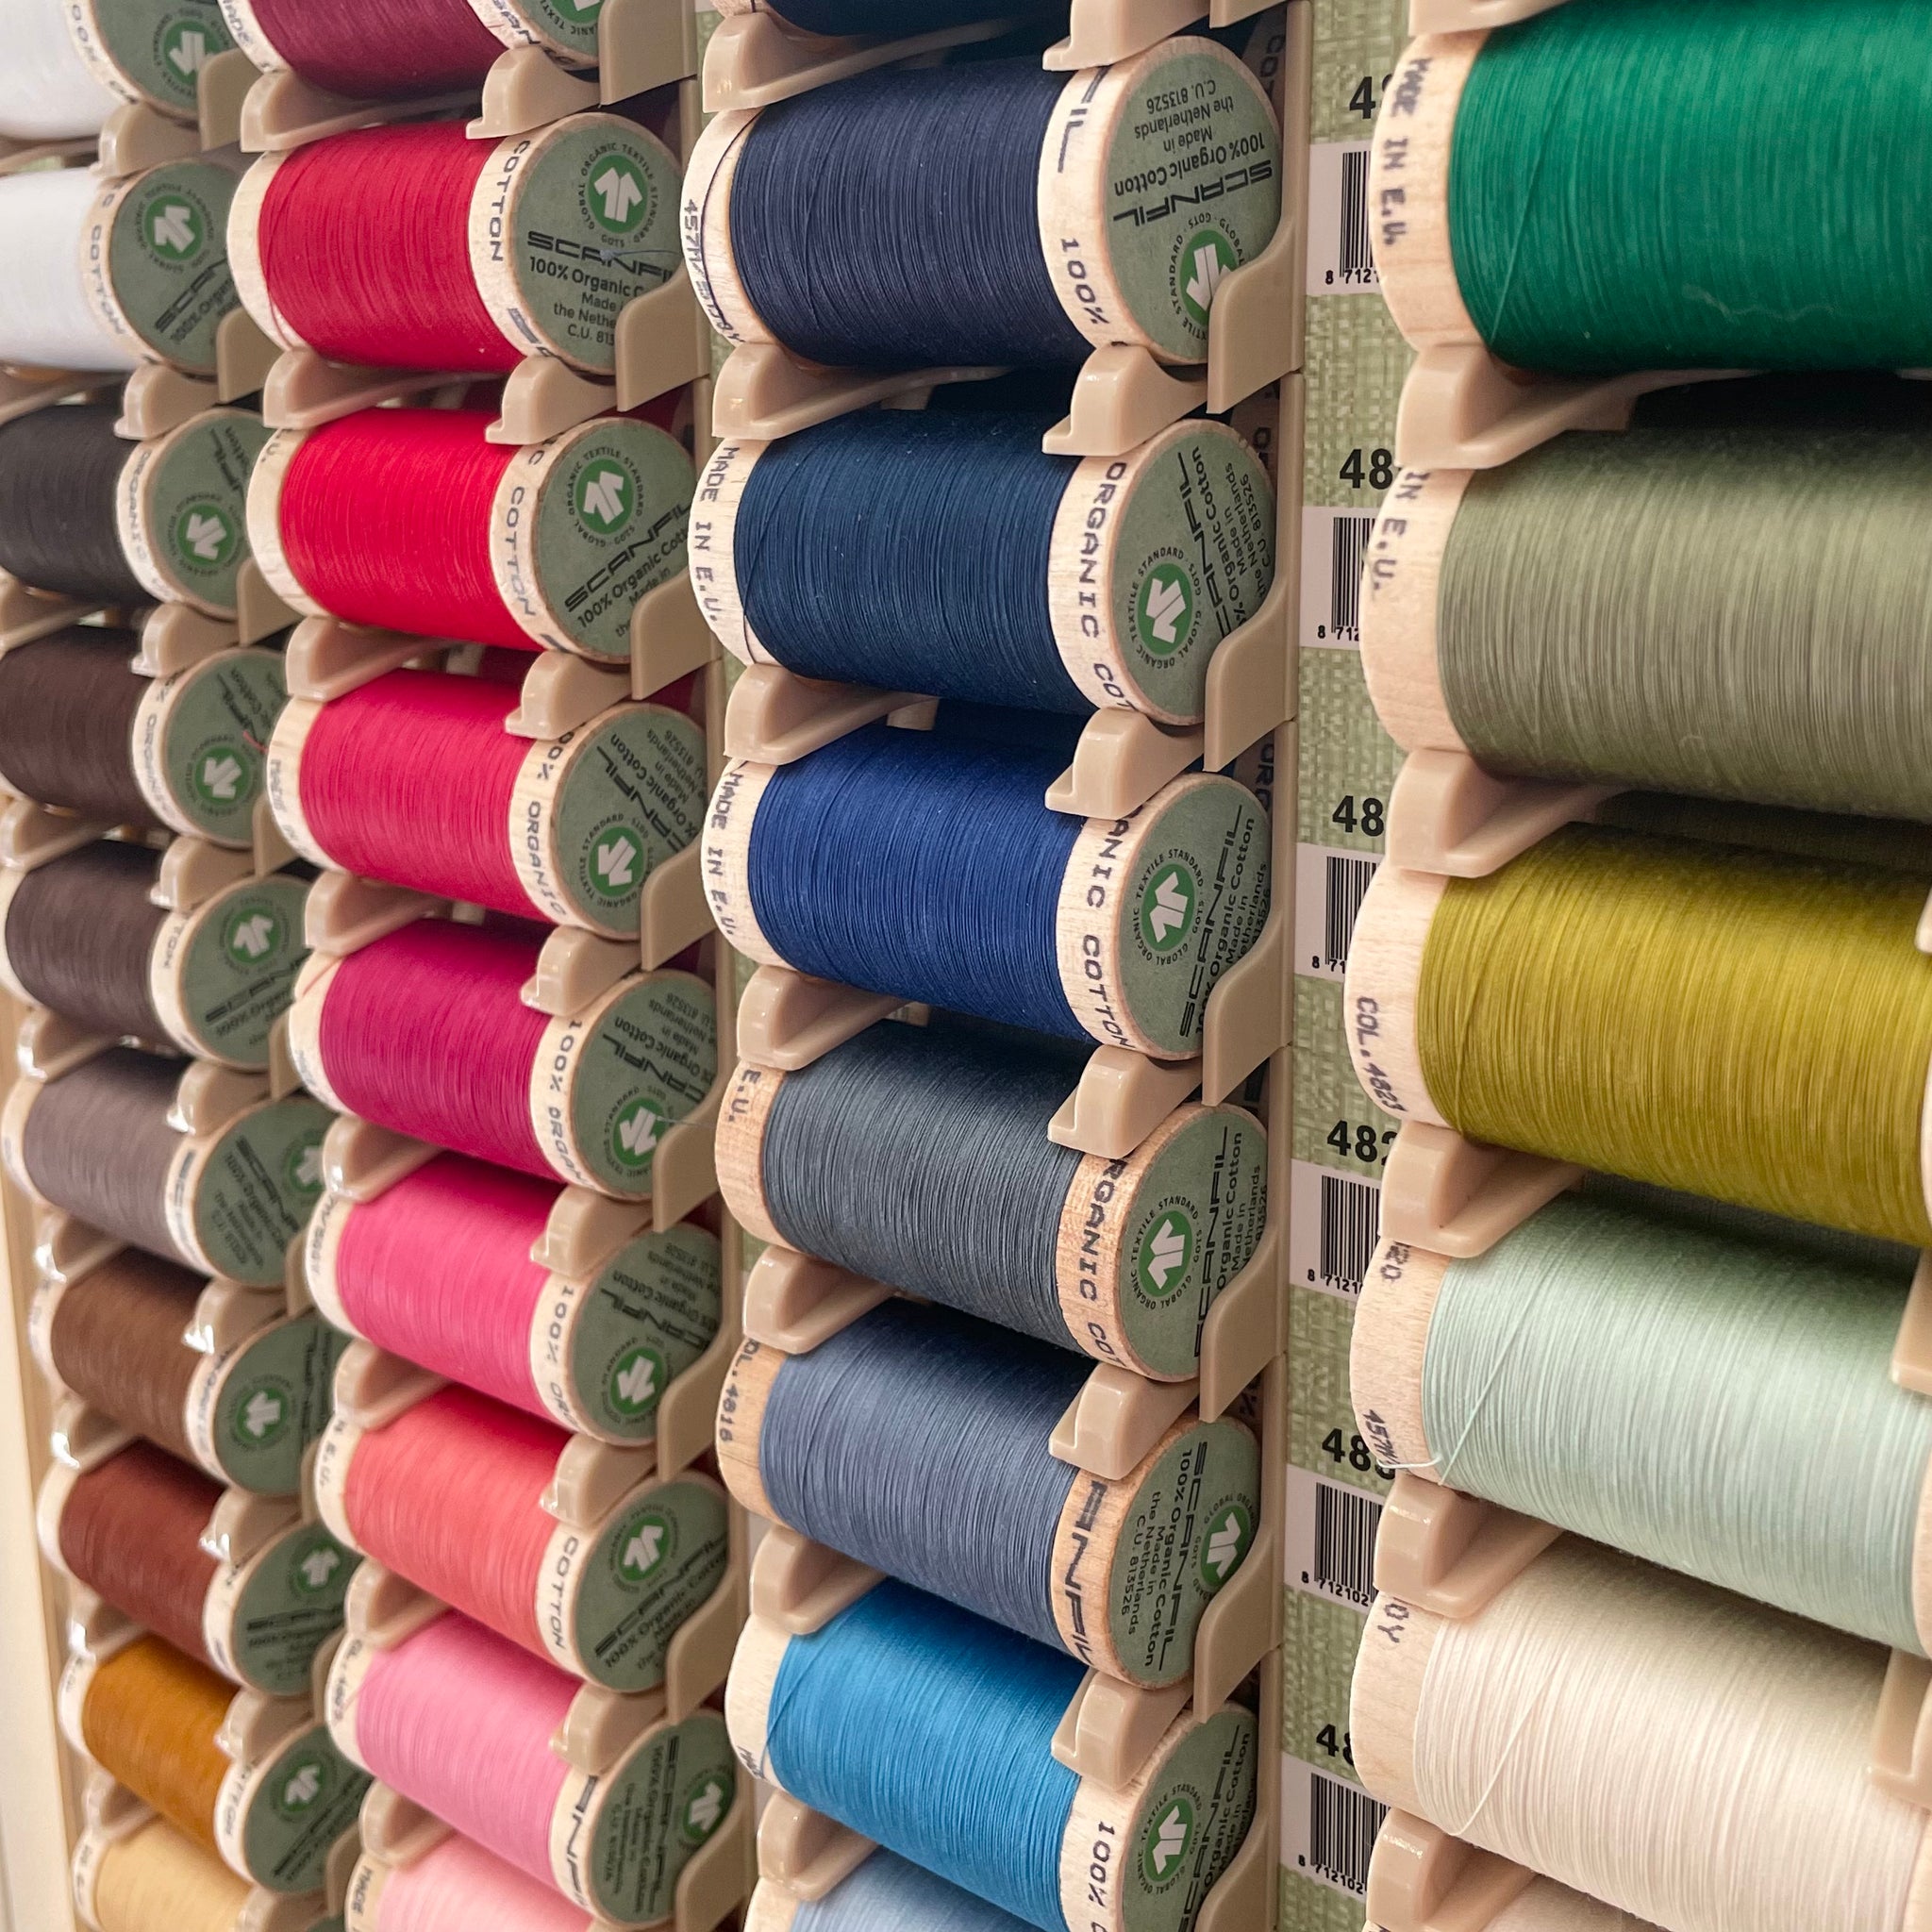 Scanfil Organic Cotton Sewing Thread 